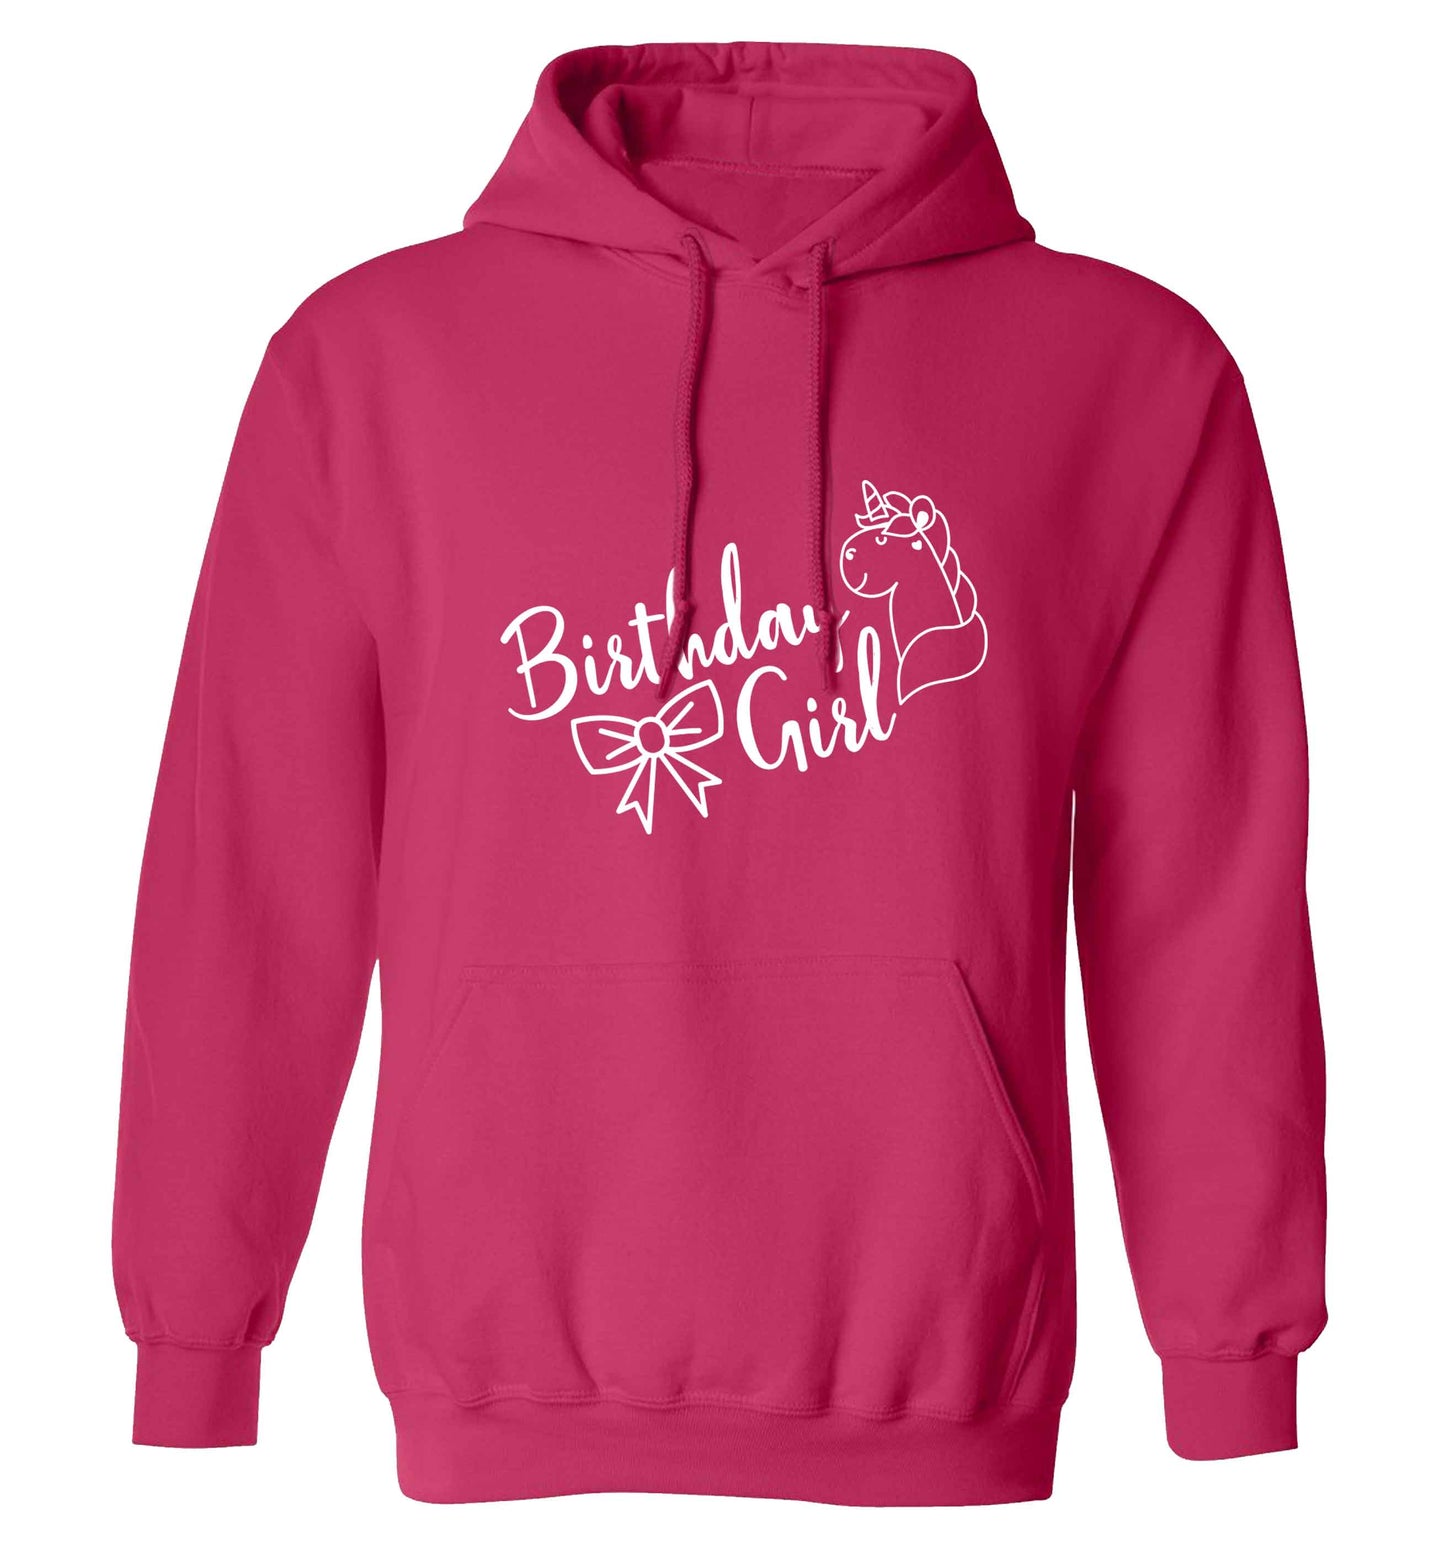 Birthday girl adults unisex pink hoodie 2XL